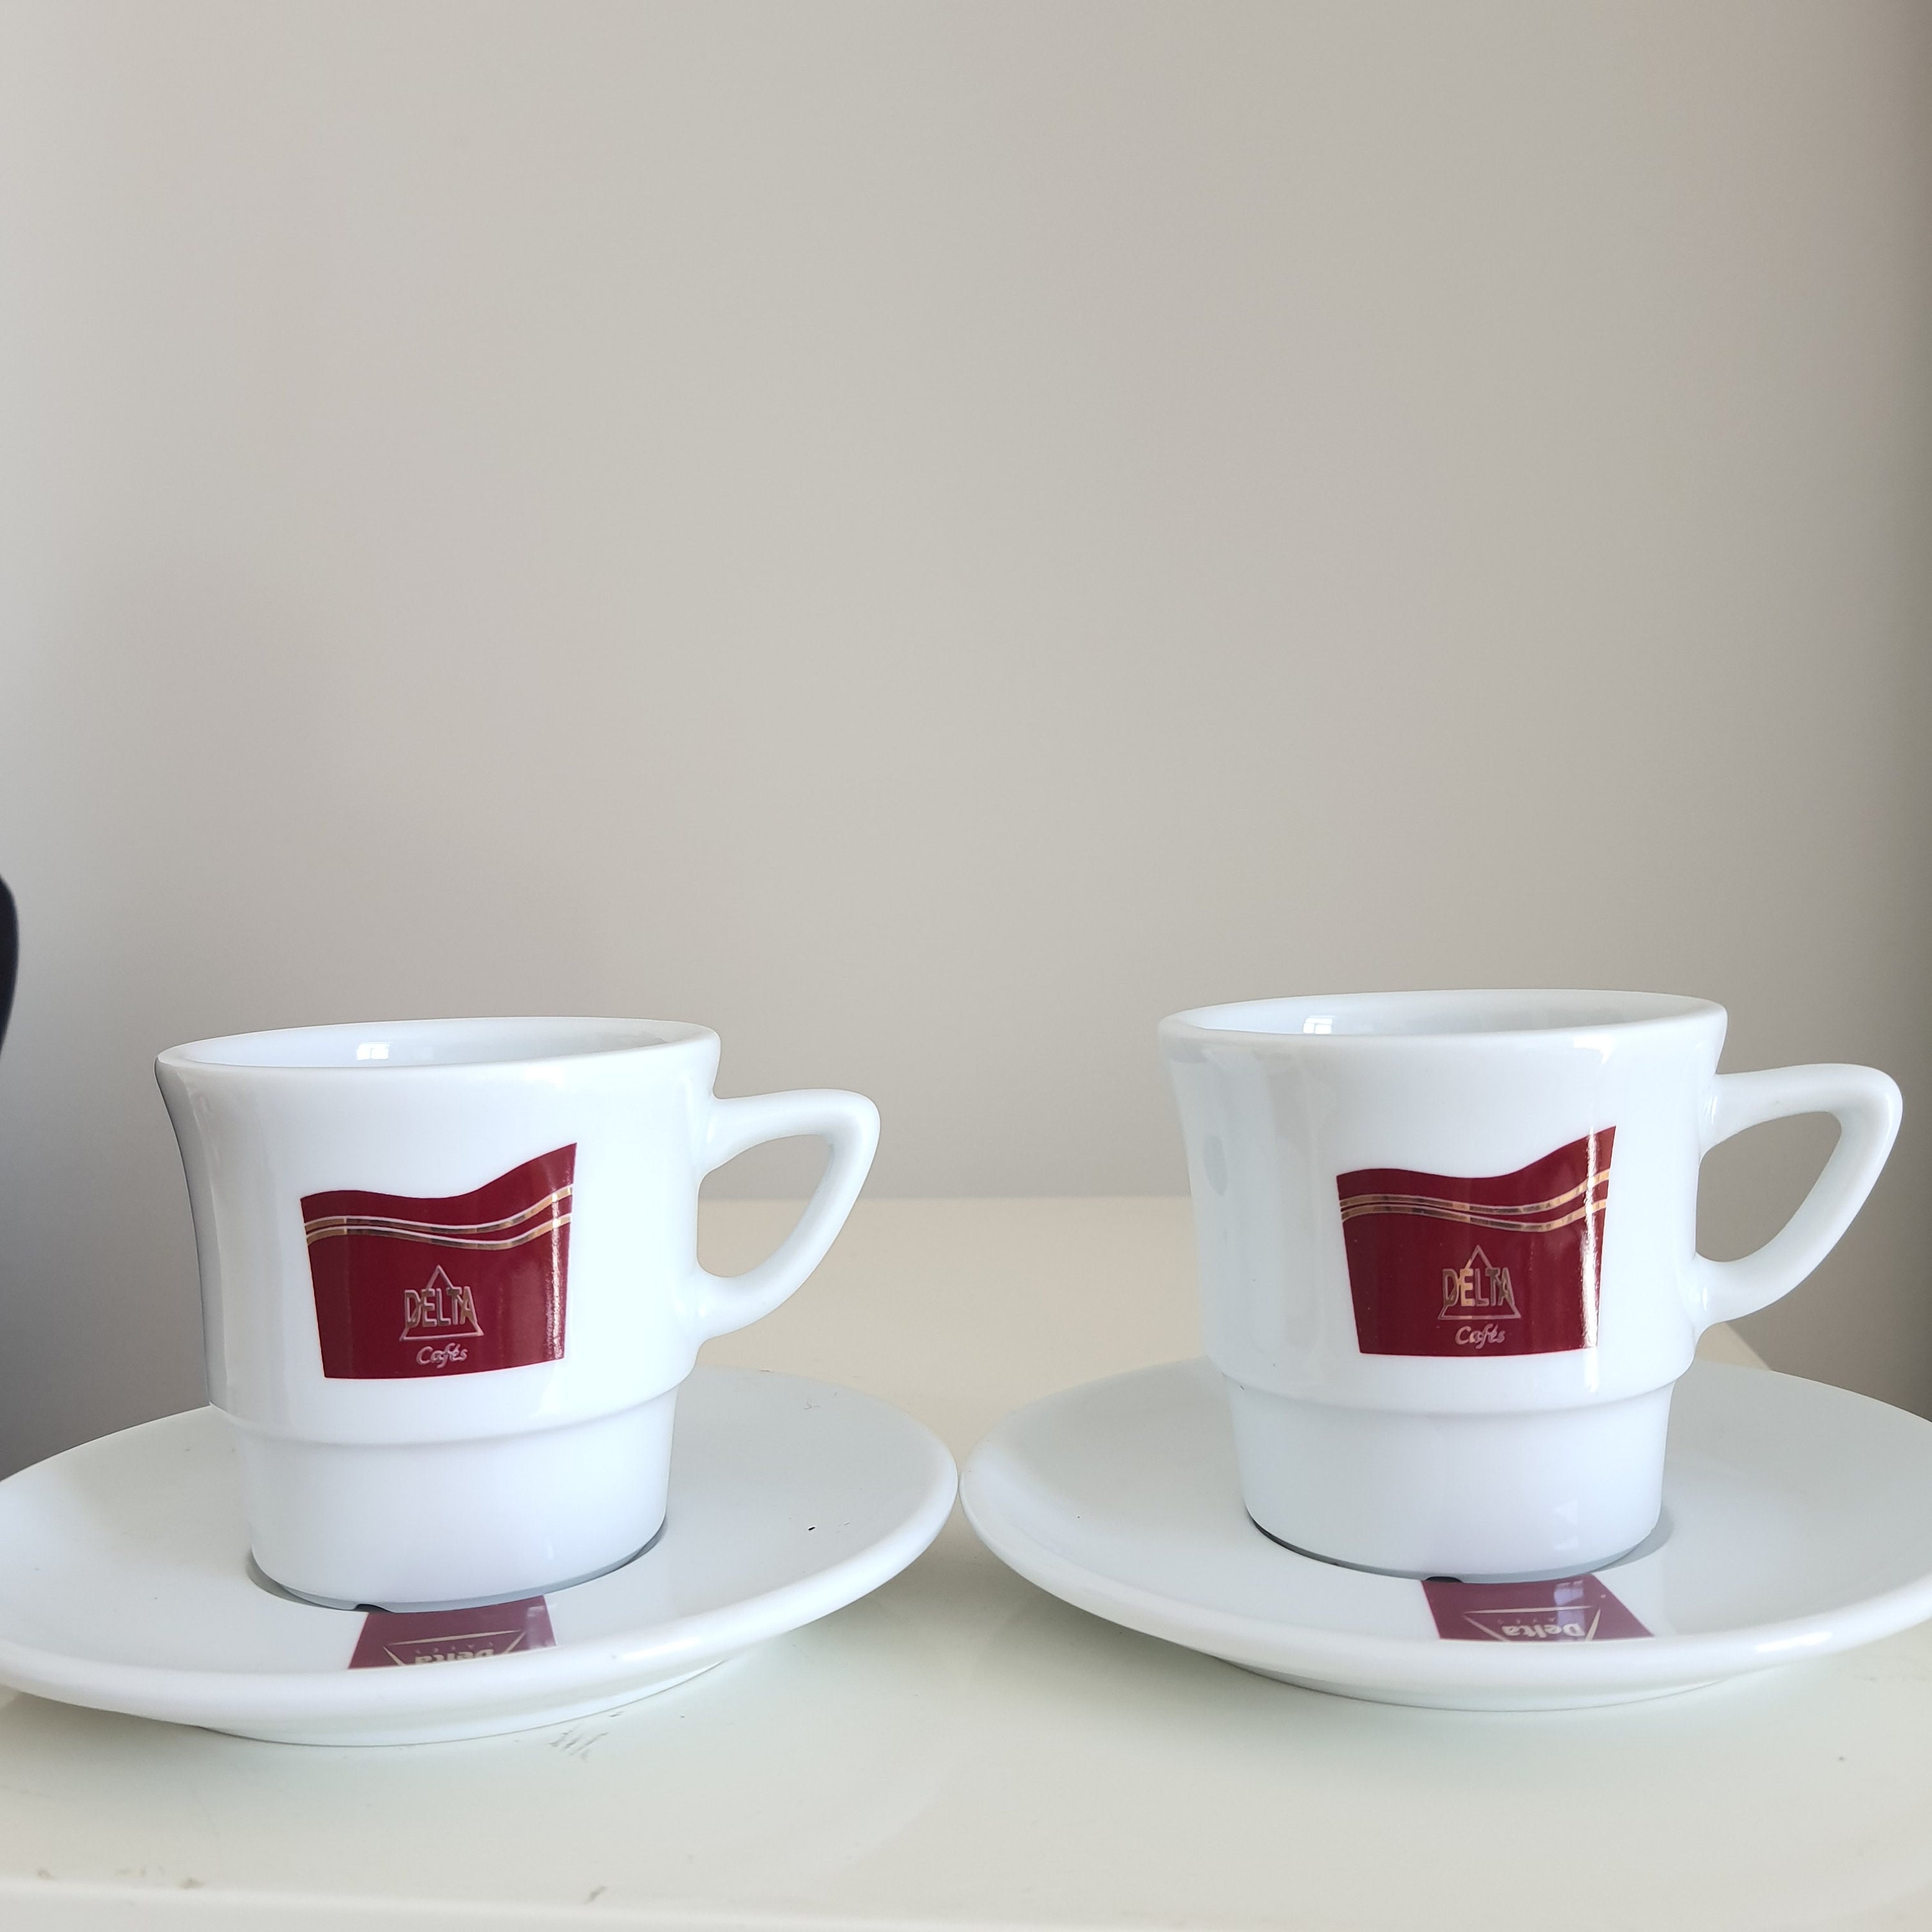 DIAMANT Europe Ware 6-PC SET Clear Glass Coffee Mug, Tea Cups New